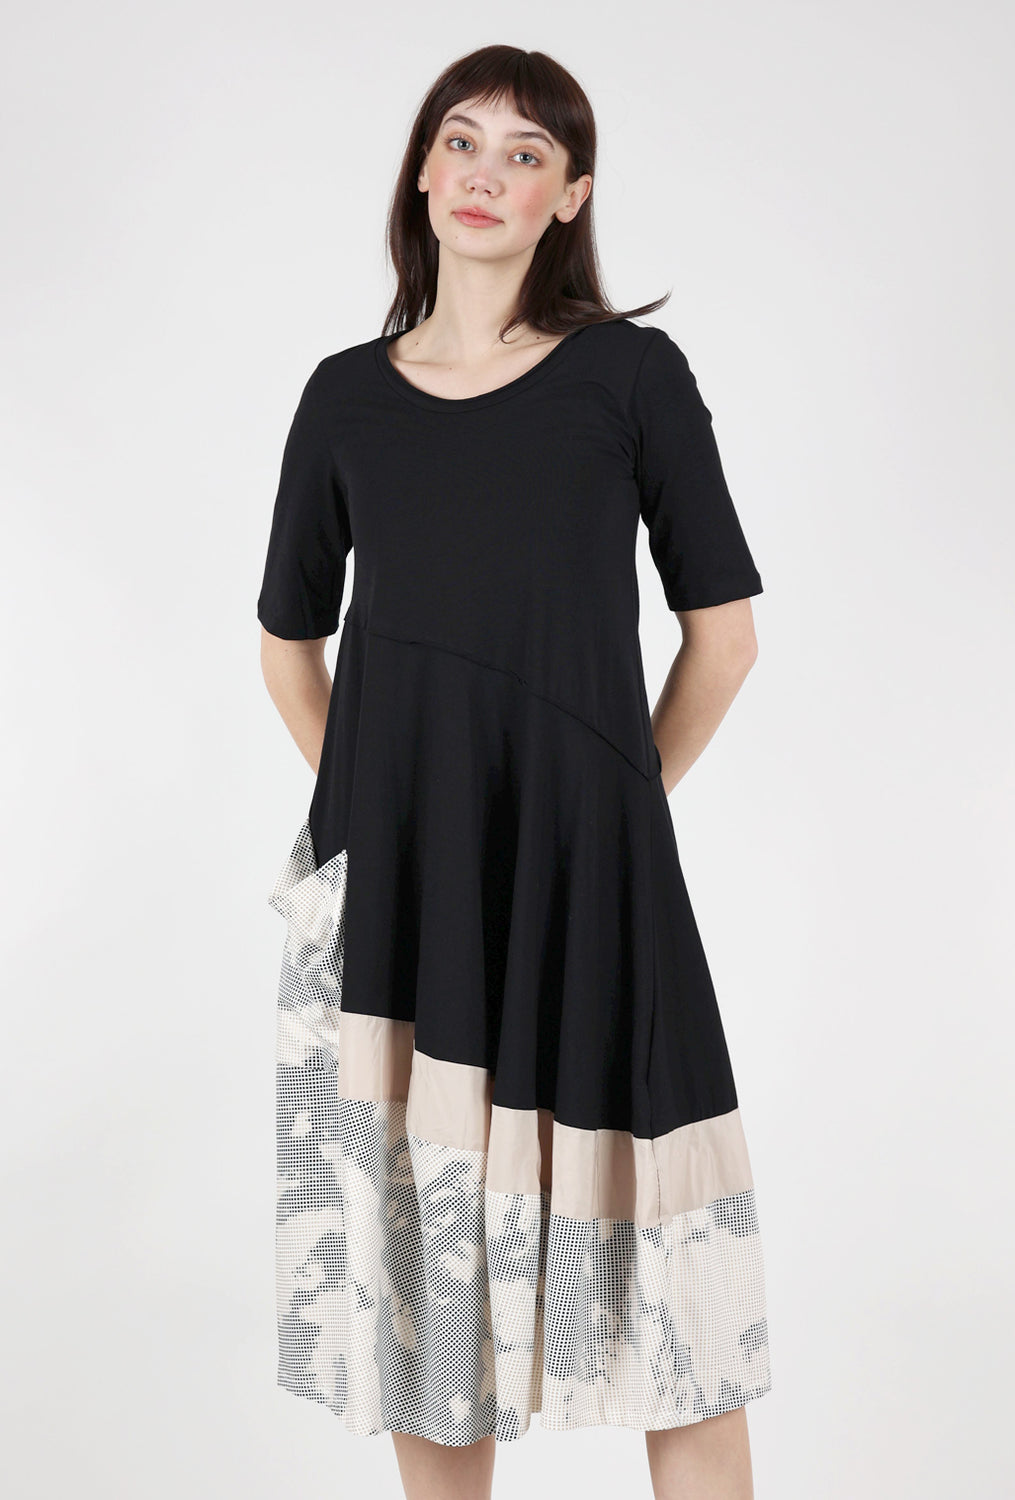 Luukaa Contrast Bottom Seamed Dress, Black 